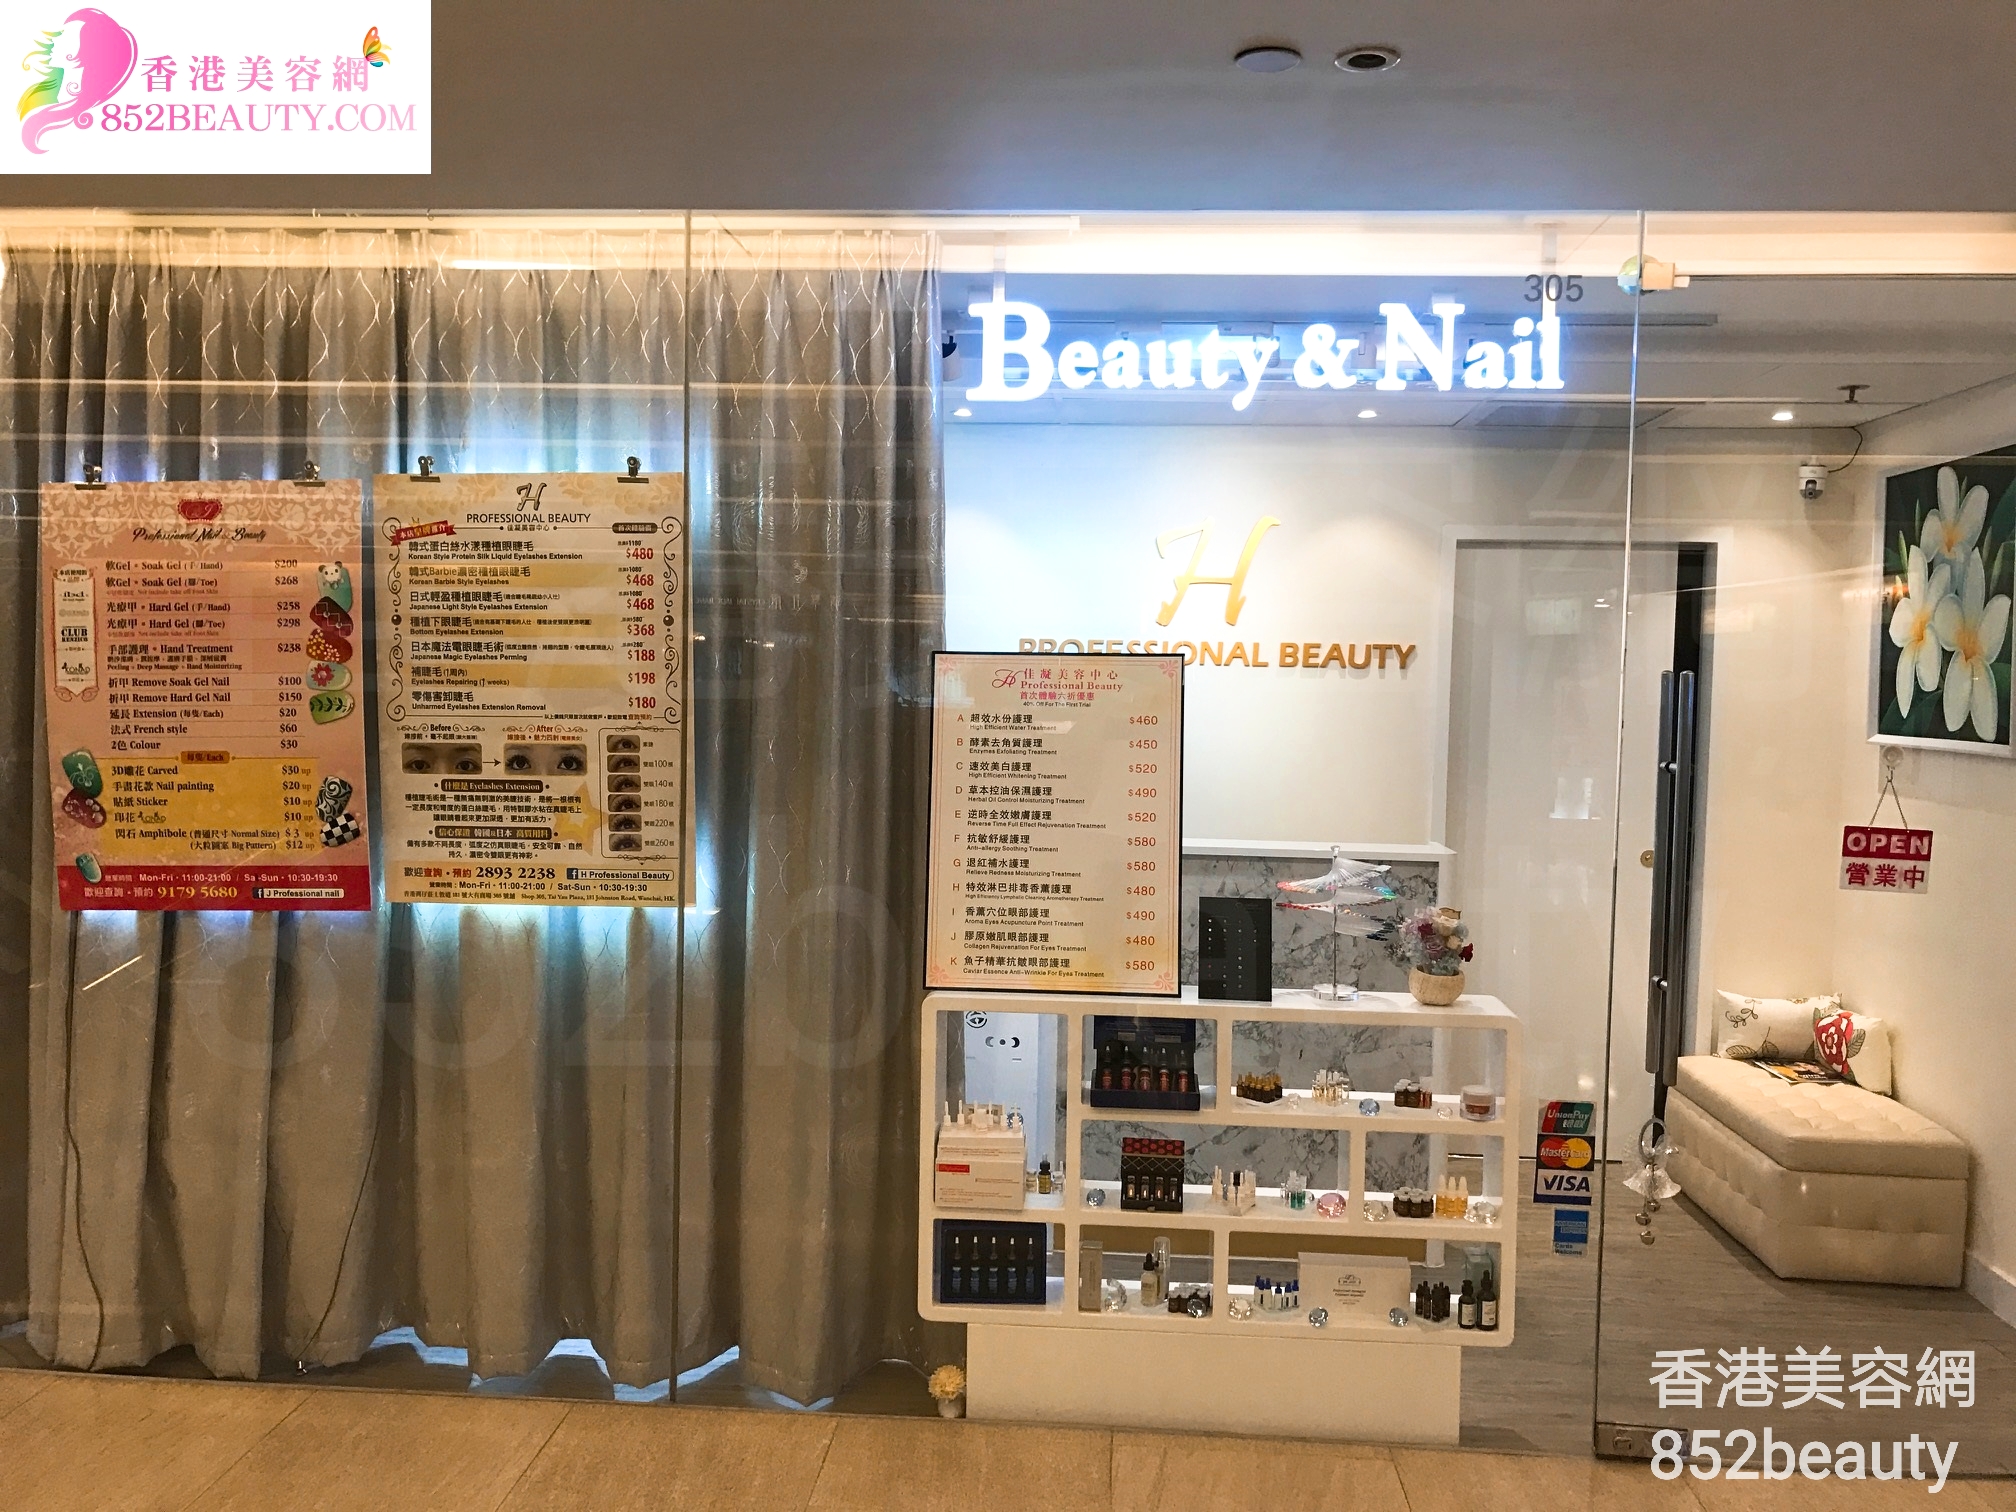 香港美容網 Hong Kong Beauty Salon 美容院 / 美容師: H professional Beauty & Nail